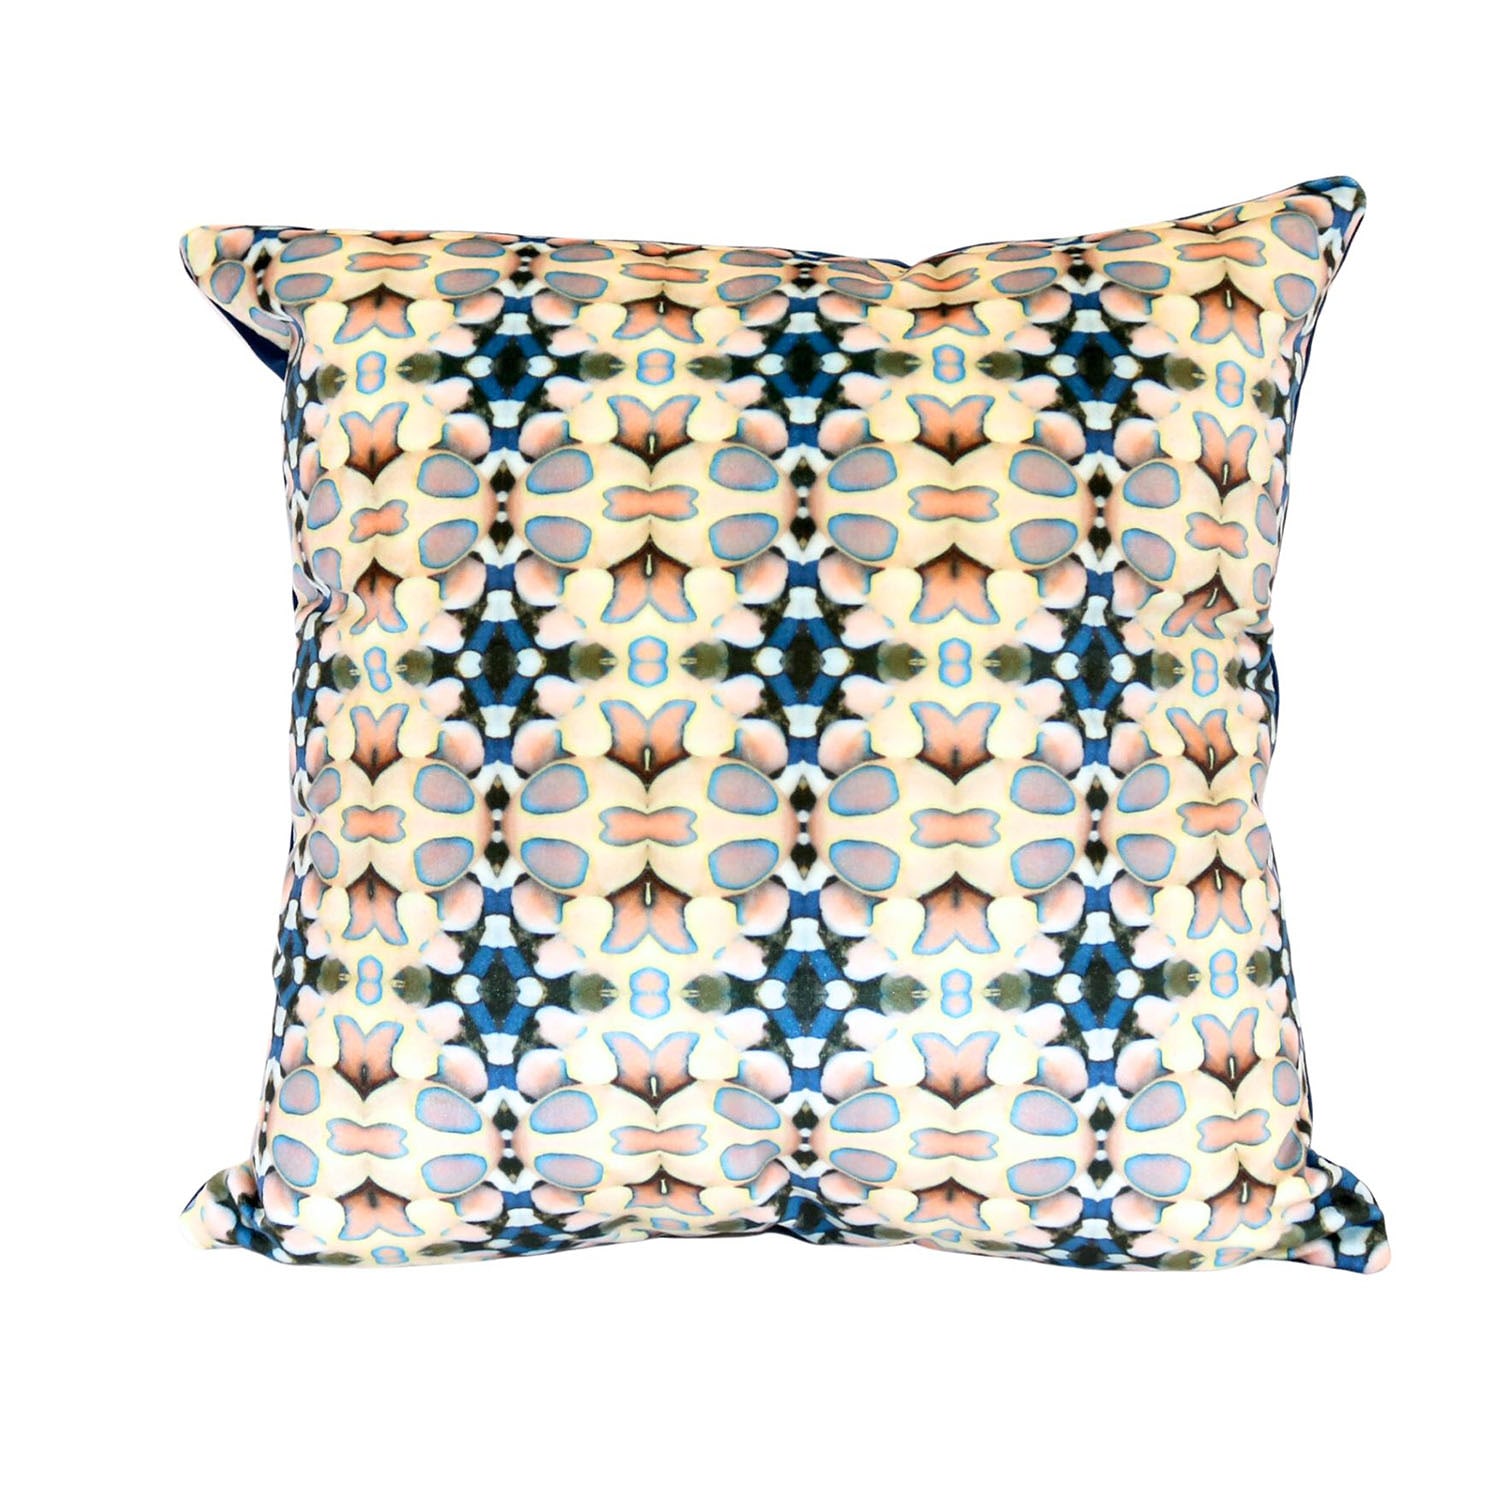 Neutrals Velvet Cushion Cover - Whimsy One Size Benni Marine Designs